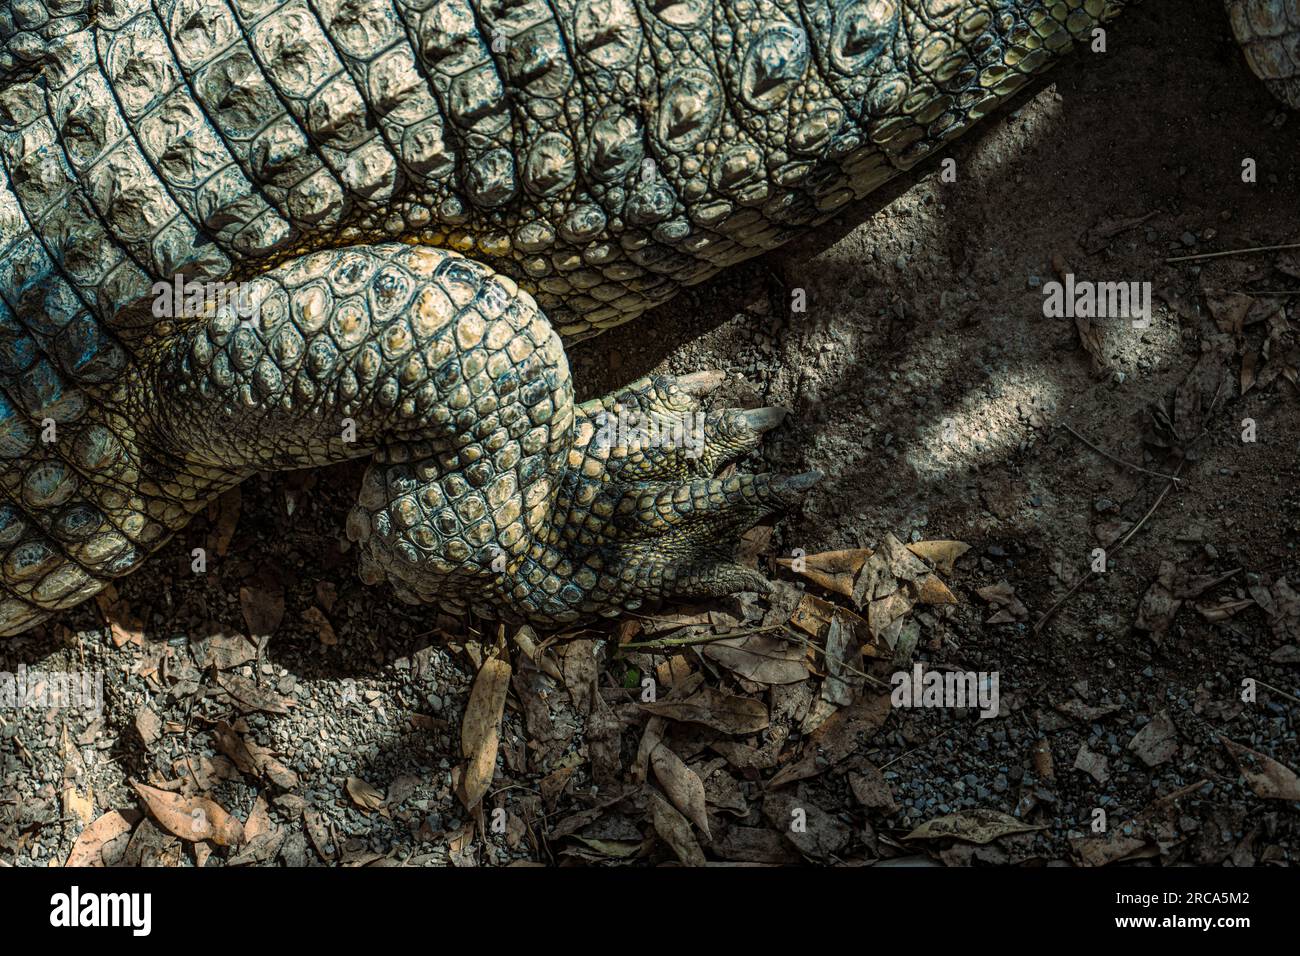 Crocodile leg and stomach region. Stock Photo